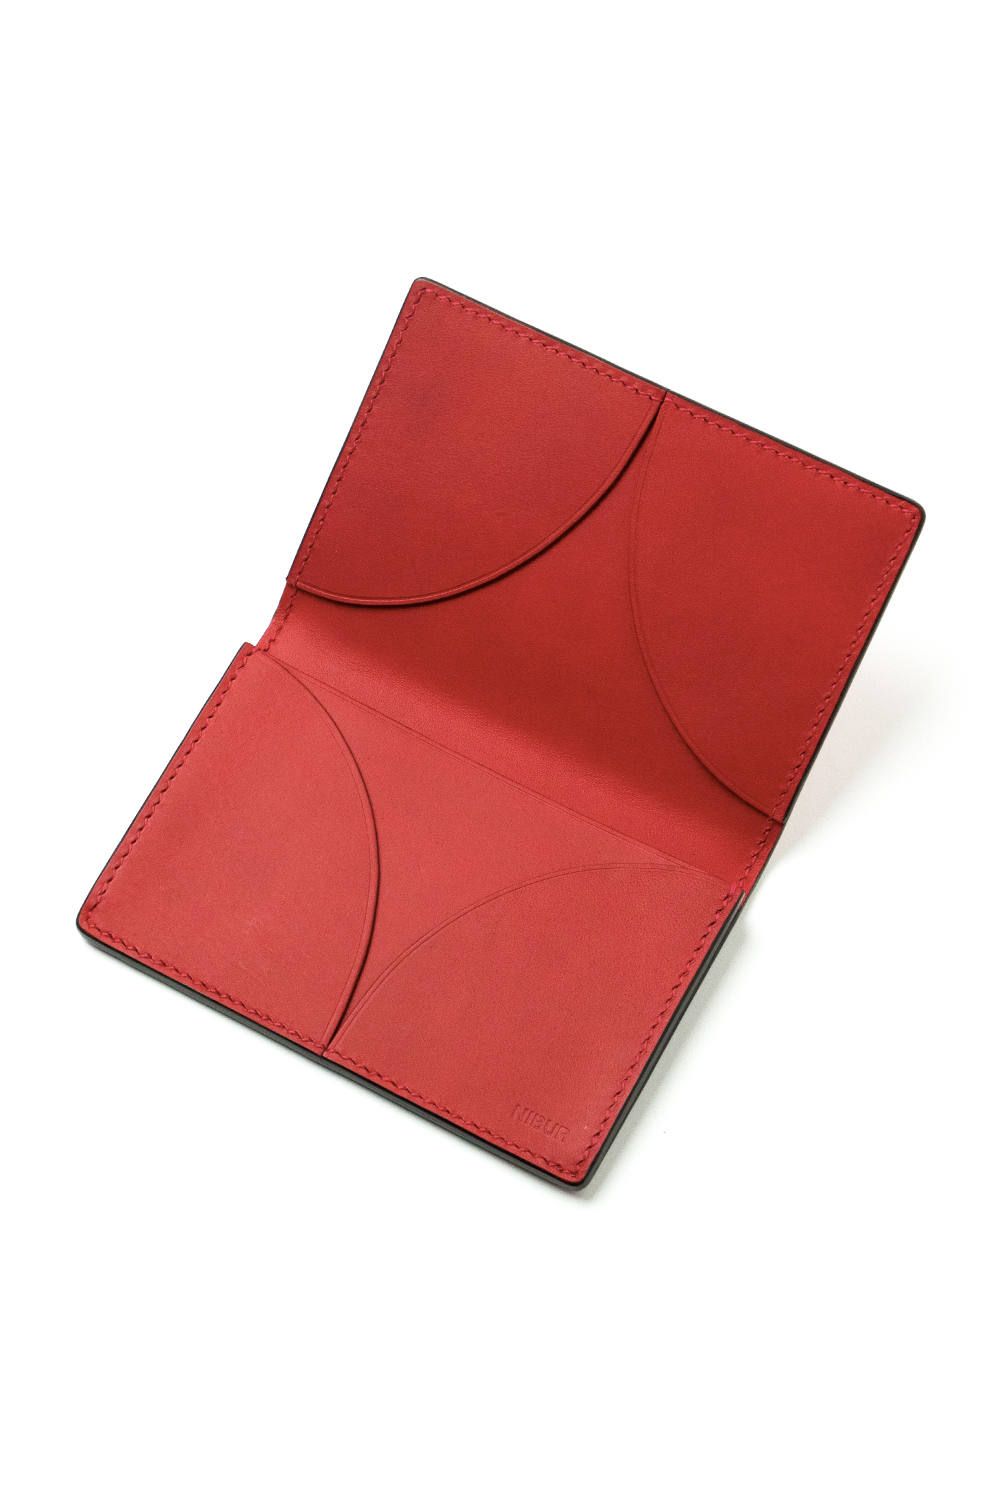 NIBUR - STARRY + - Card case [RED] / スターリー プラス - 七宝